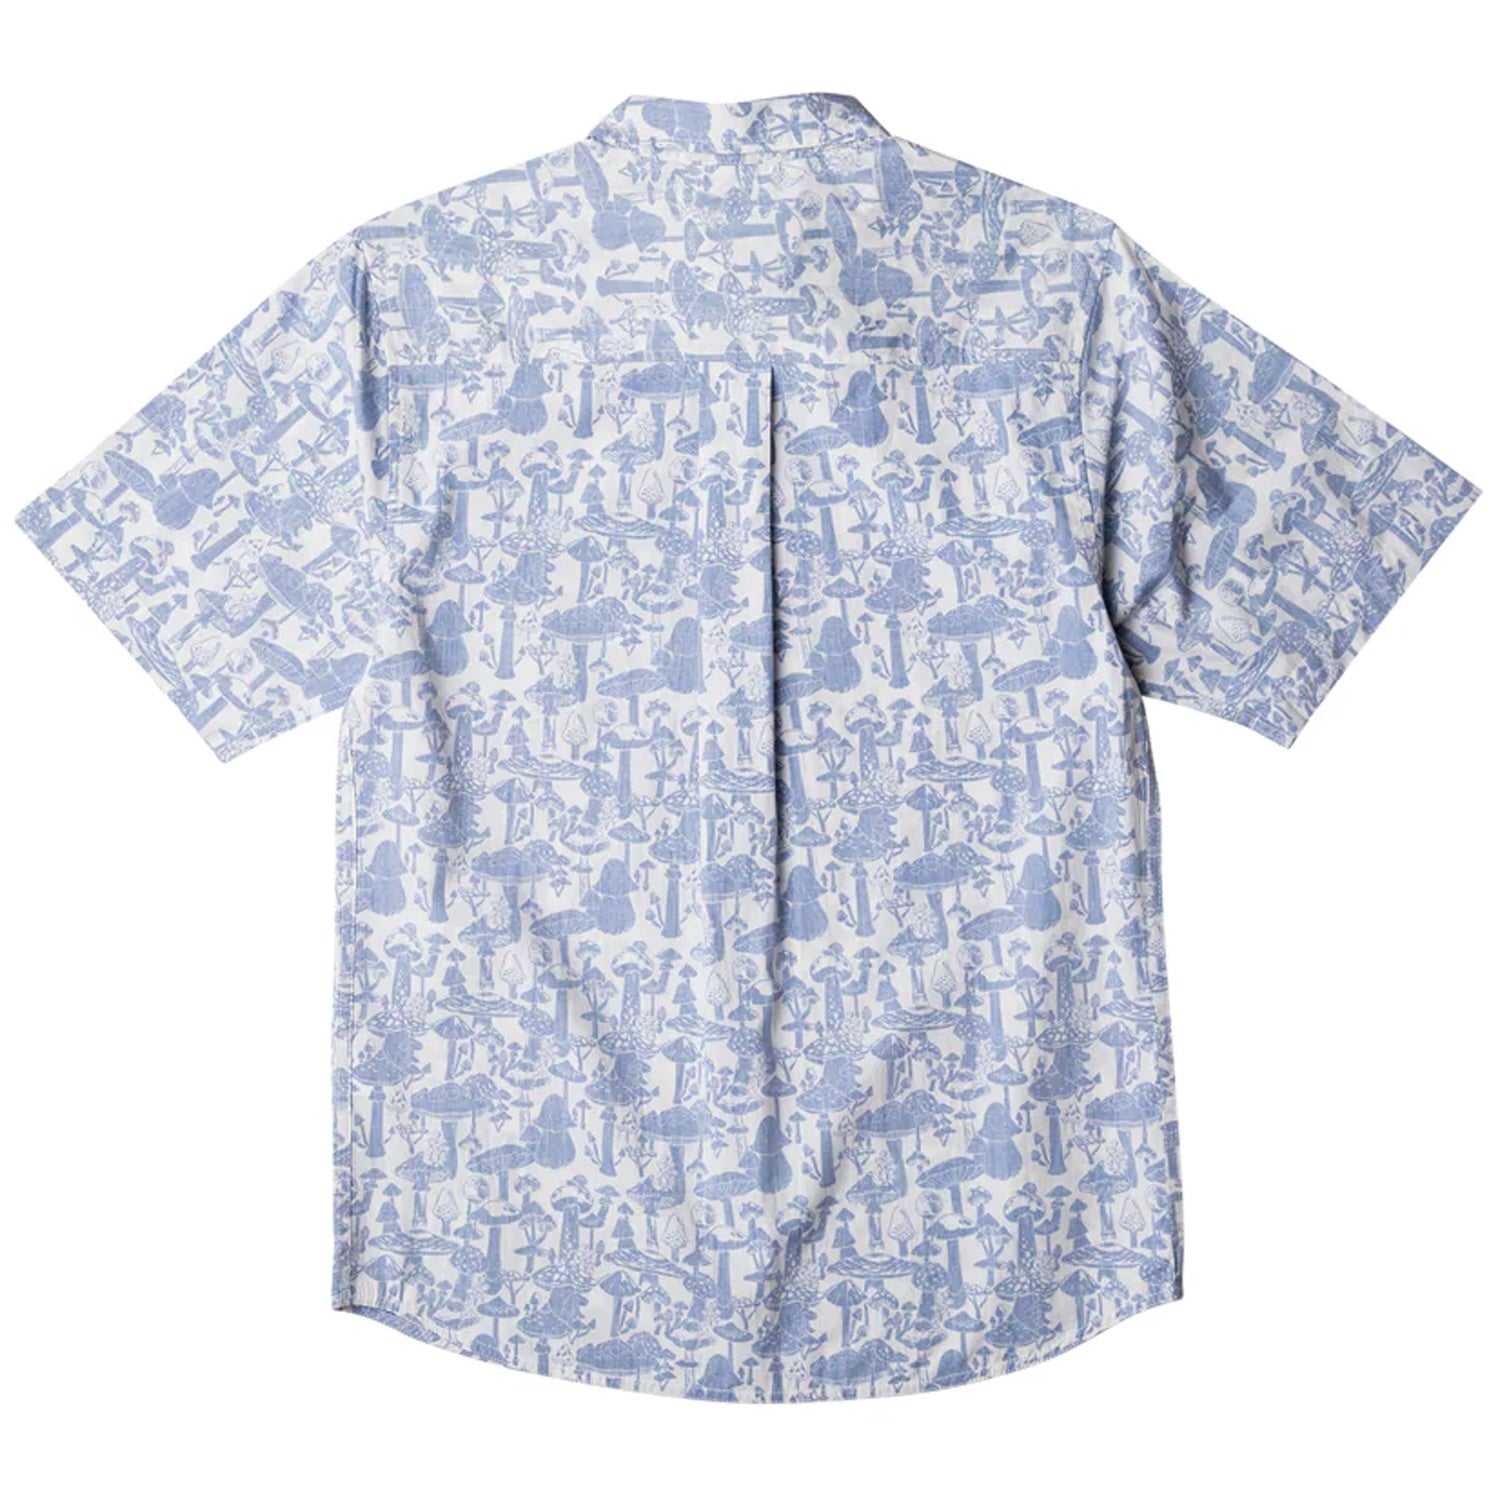 Kavu Topspot Short Sleeve Shirt - Mushroom Forest